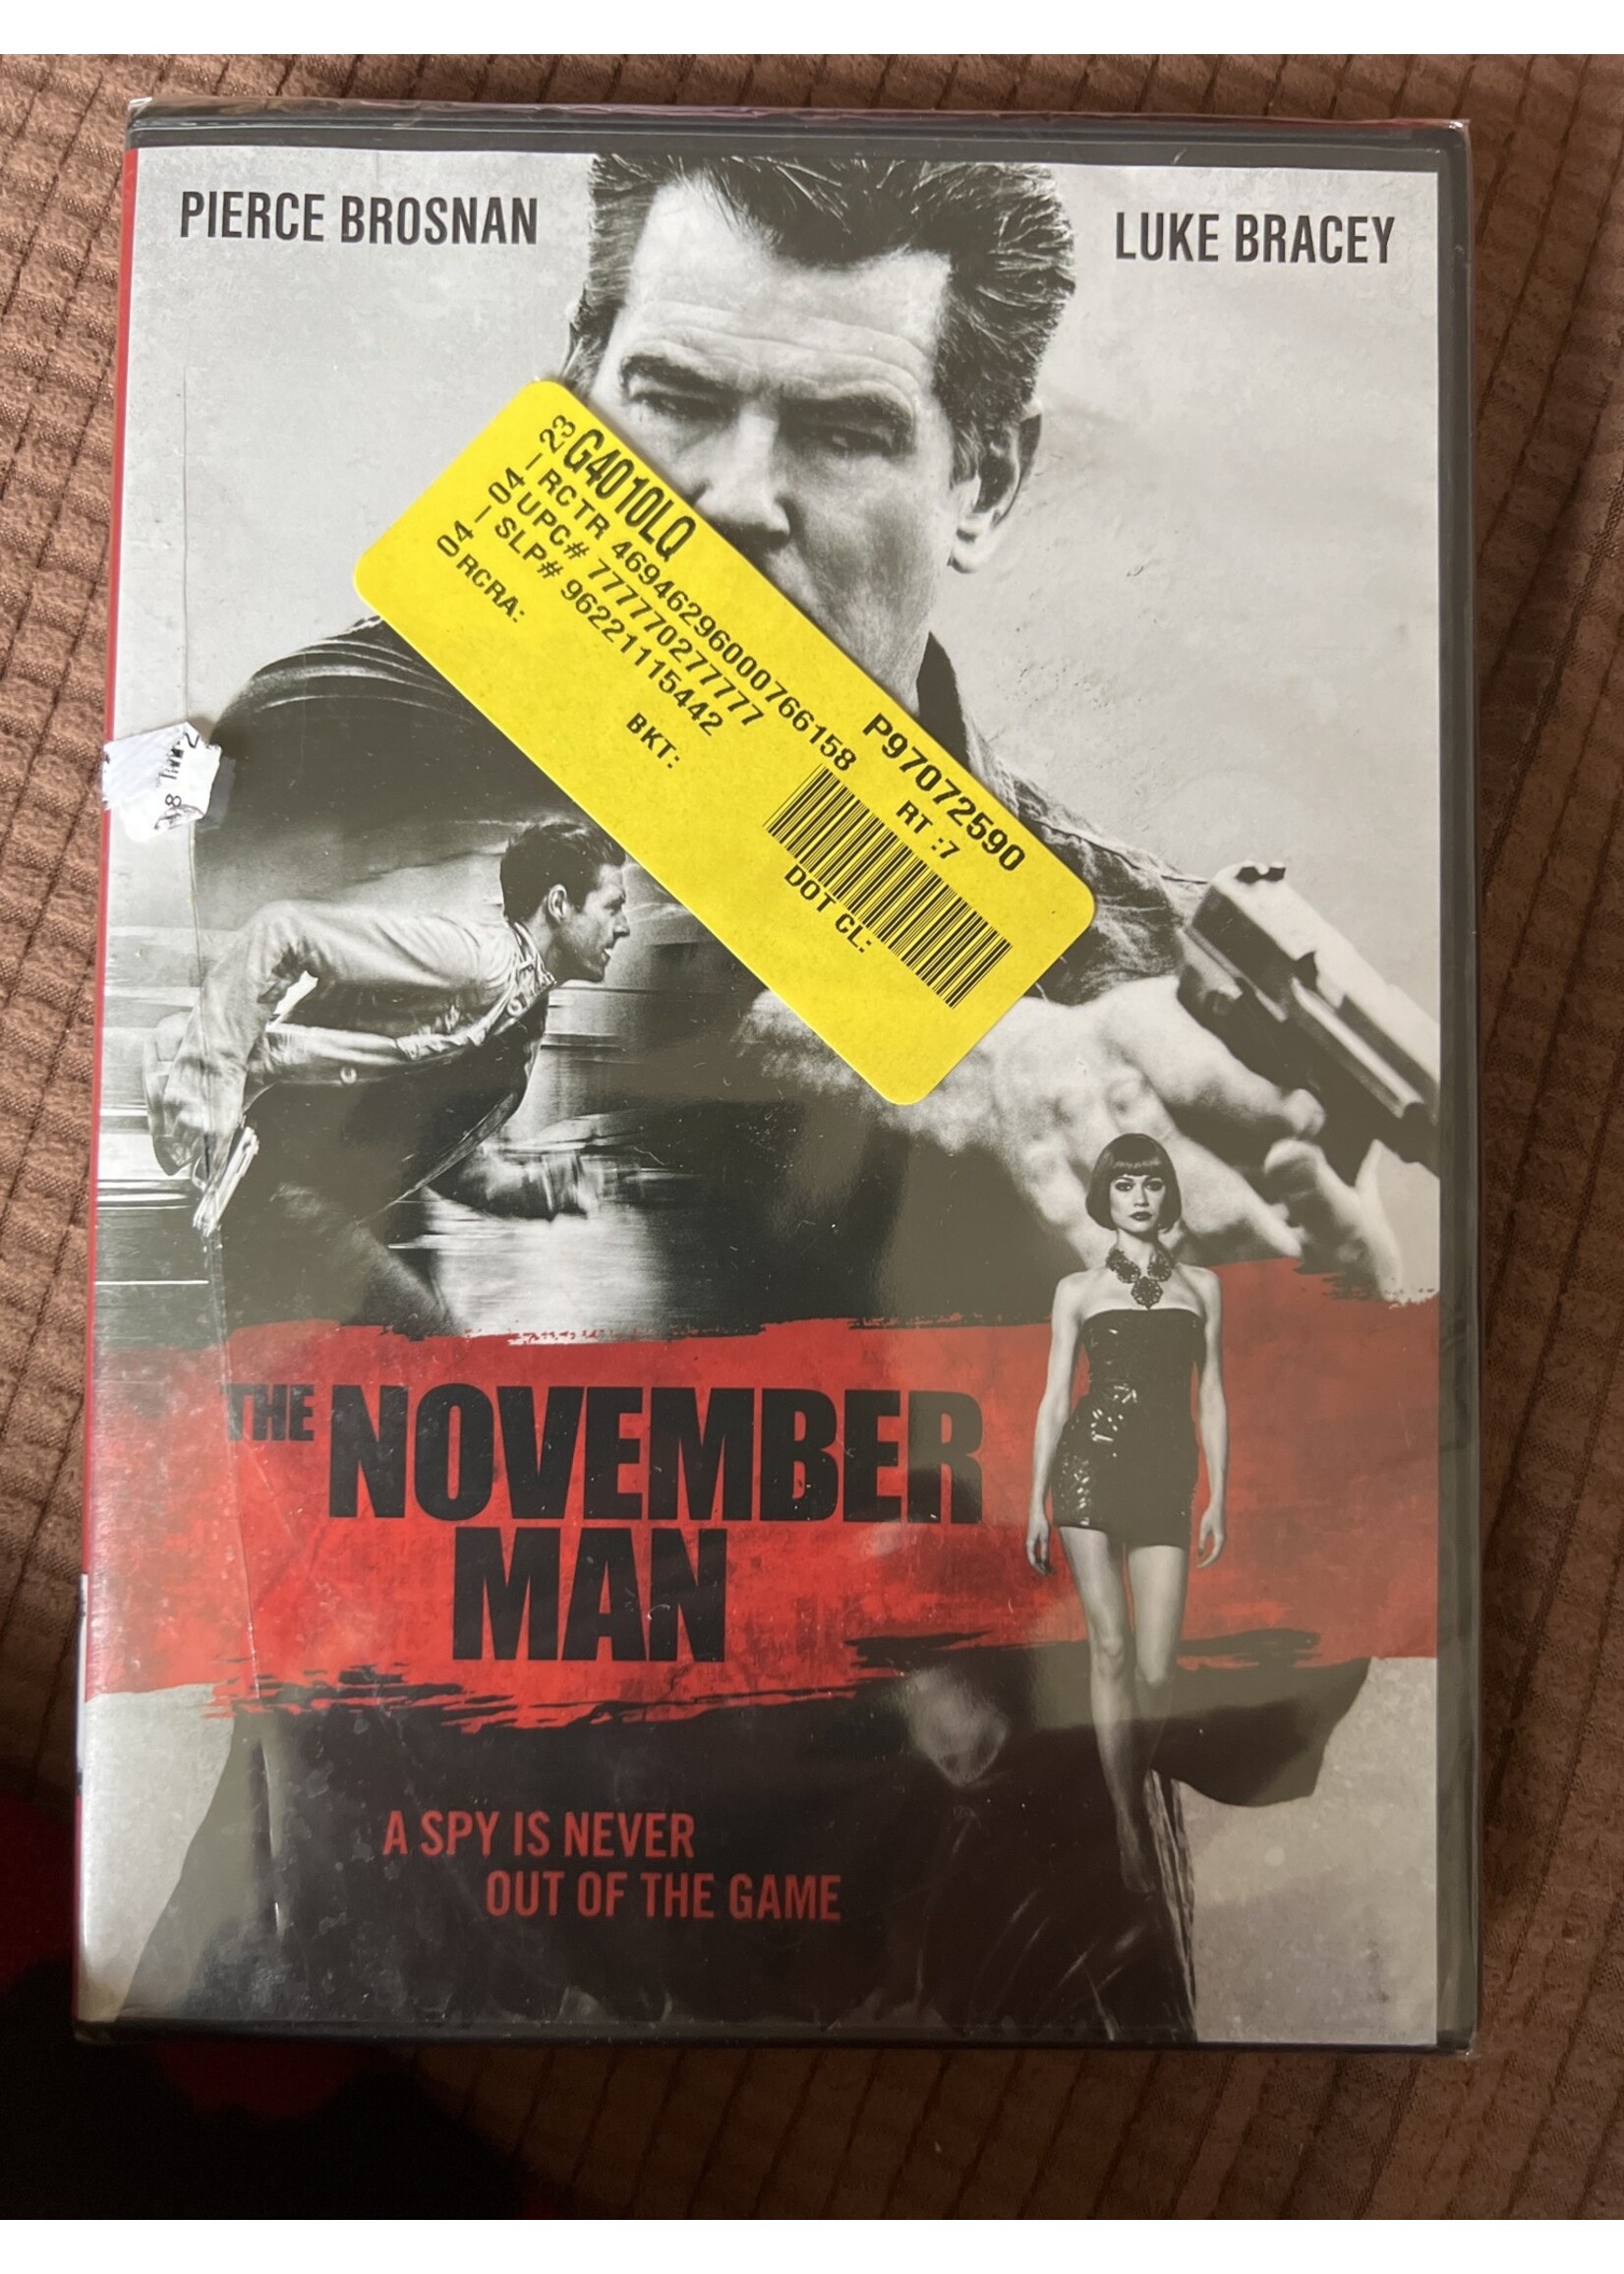 DVD is loose in packaging- The November Man  DVD sealed